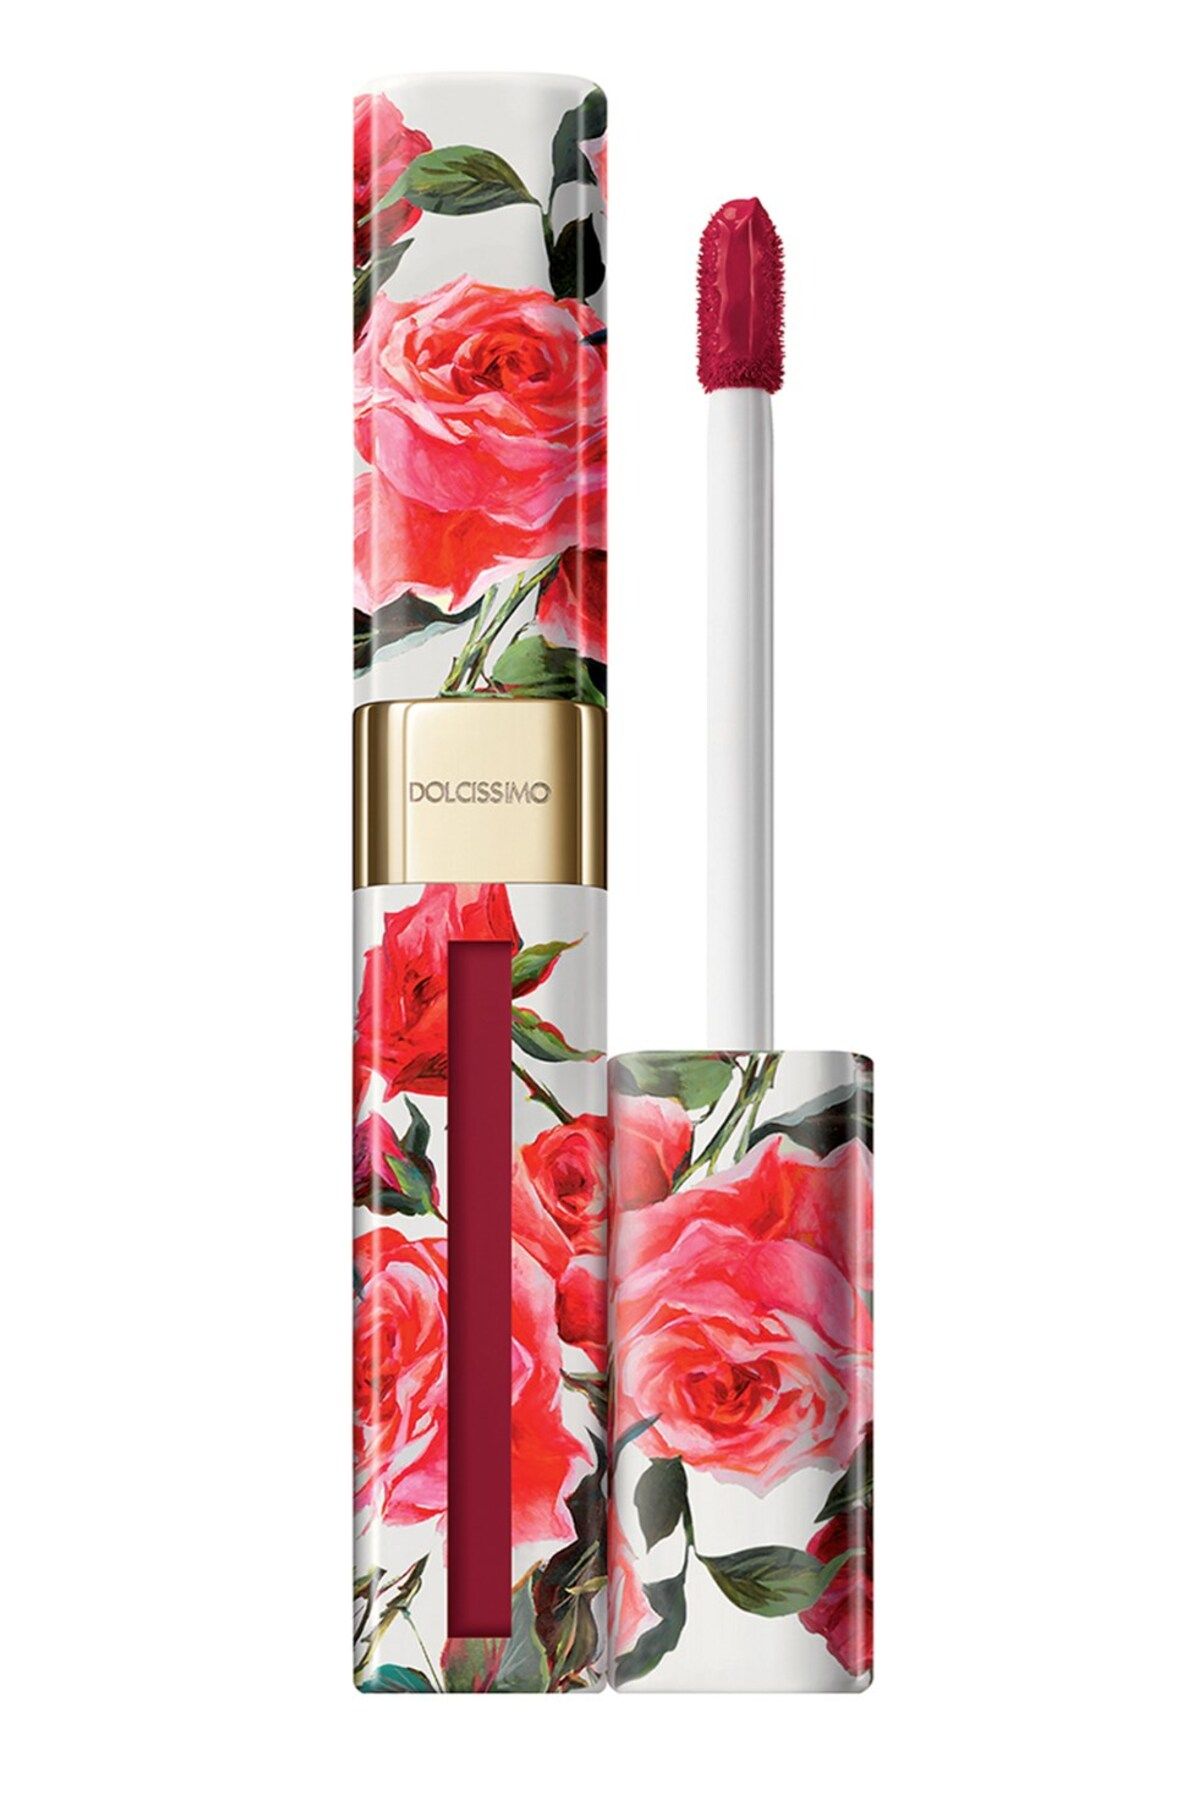 Dolce &Gabbana Dolcıssımo Matte Lıquıd Lıpcolour 10 Ruby 5Ml